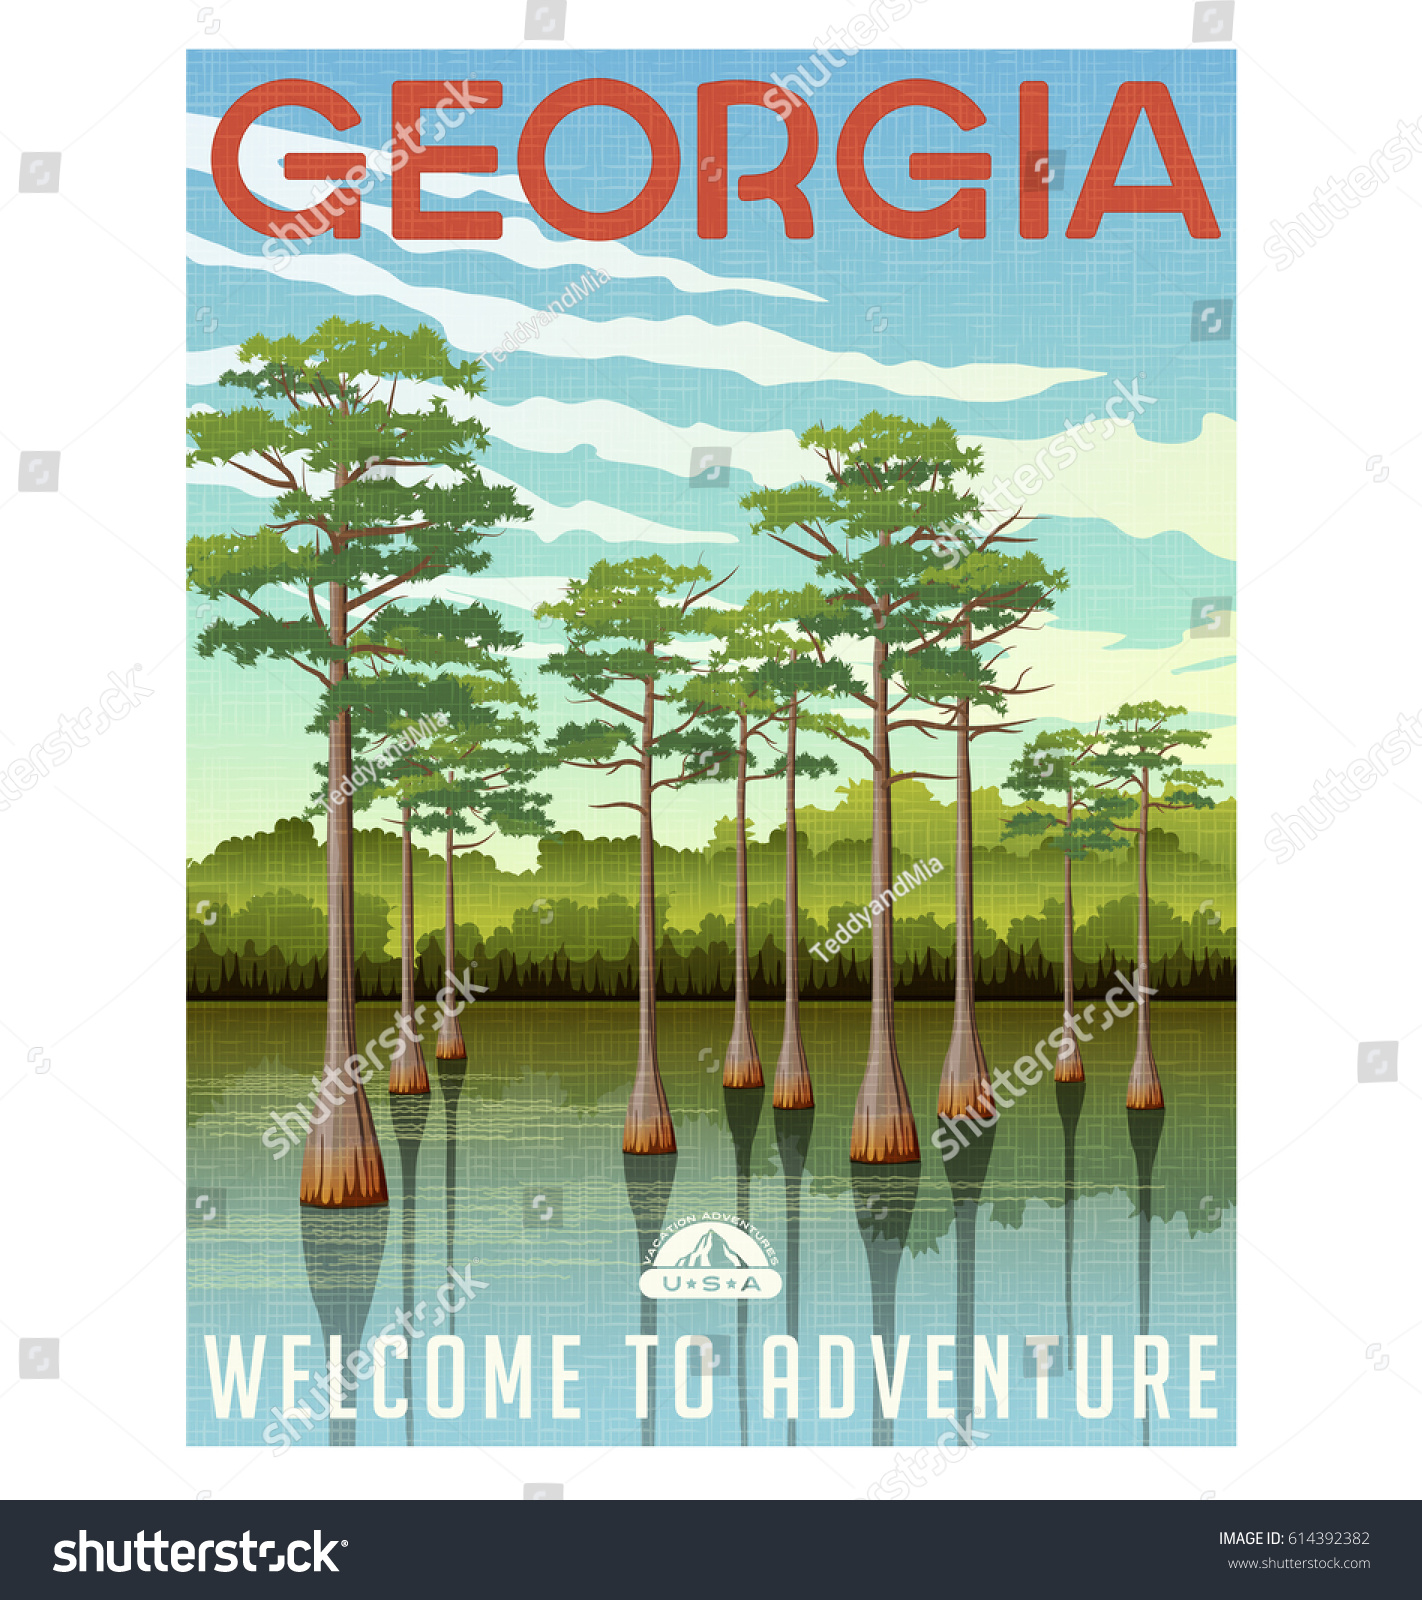 SVG of Georgia travel poster or sticker. Vector illustration of bald cypress in wetland swamp svg